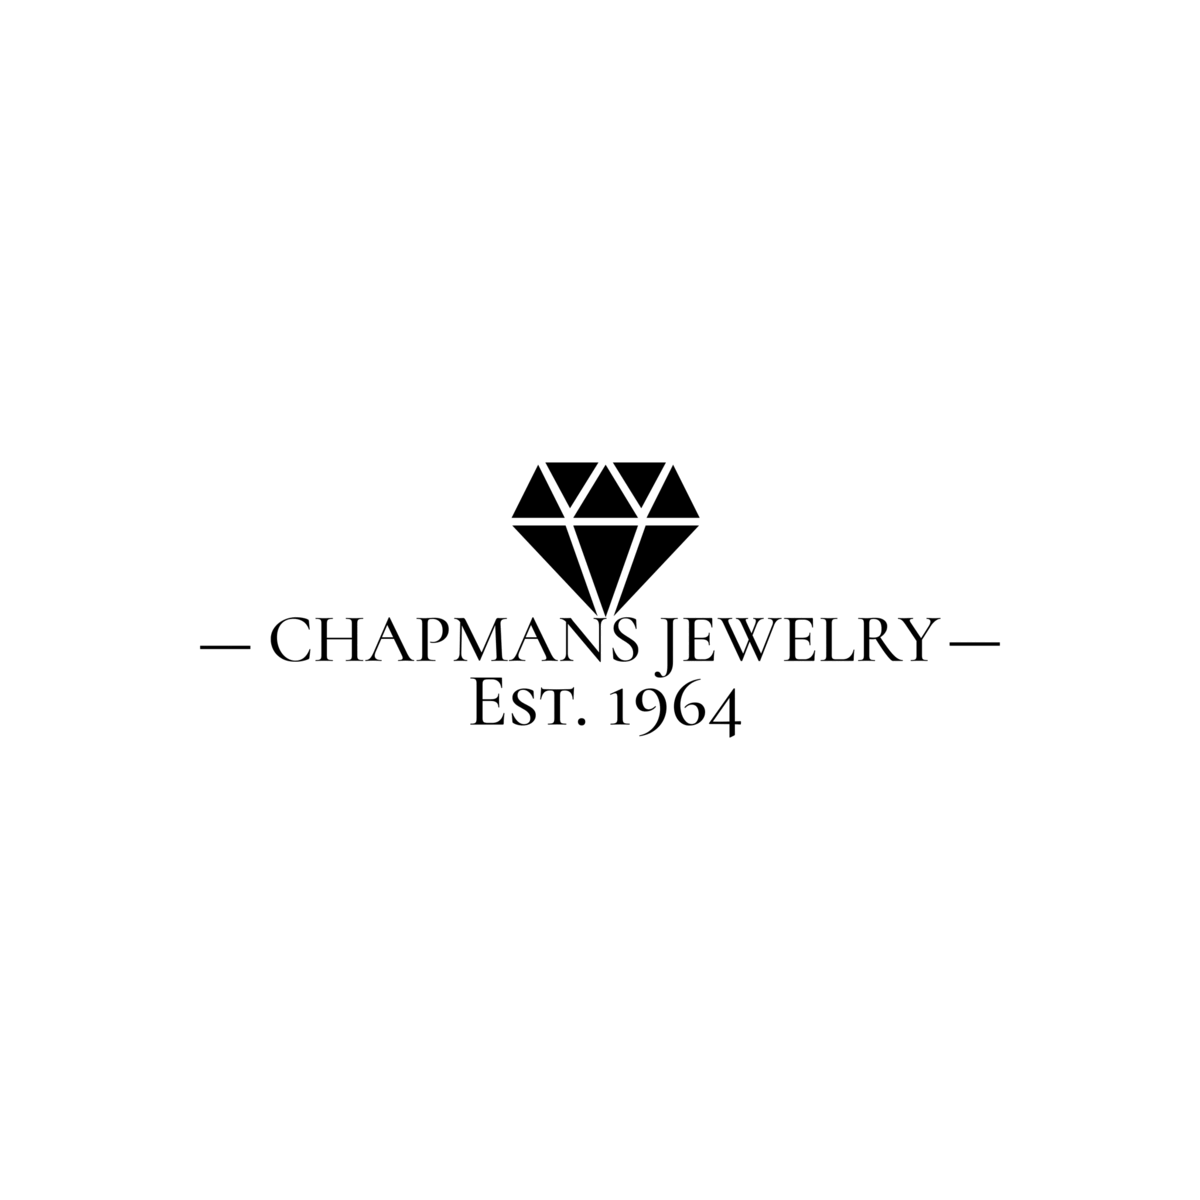 Chapman's Jewelry Homepage